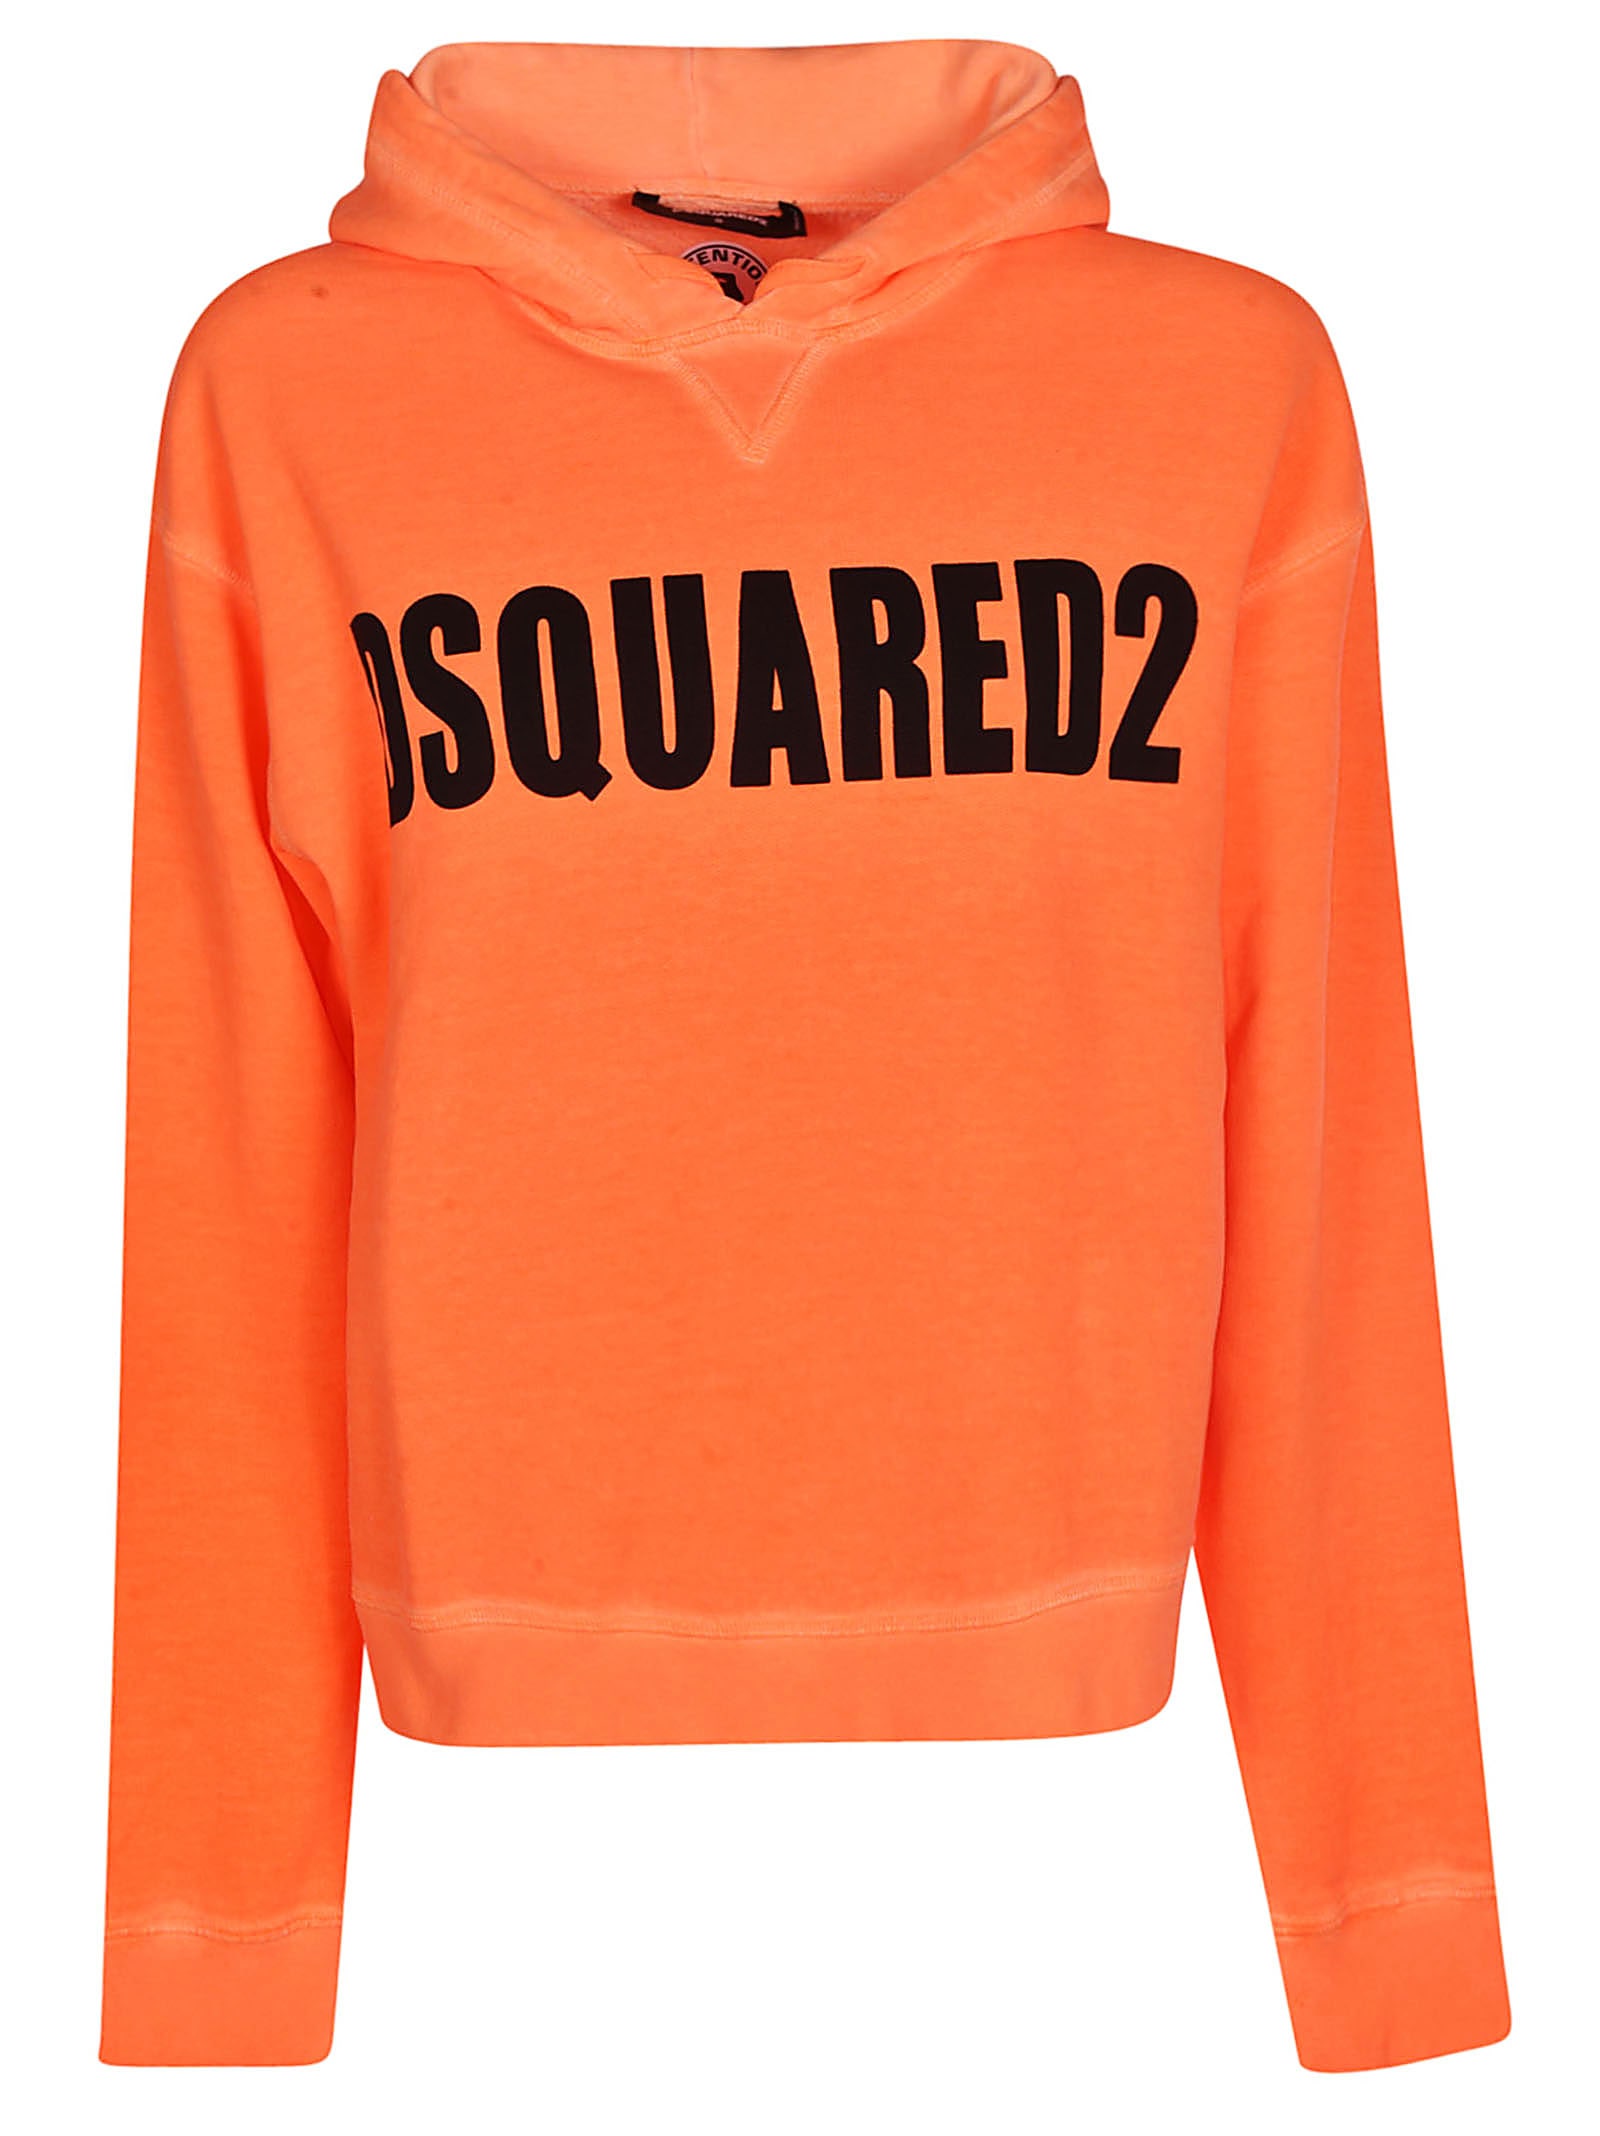 dsquared orange sweatshirt